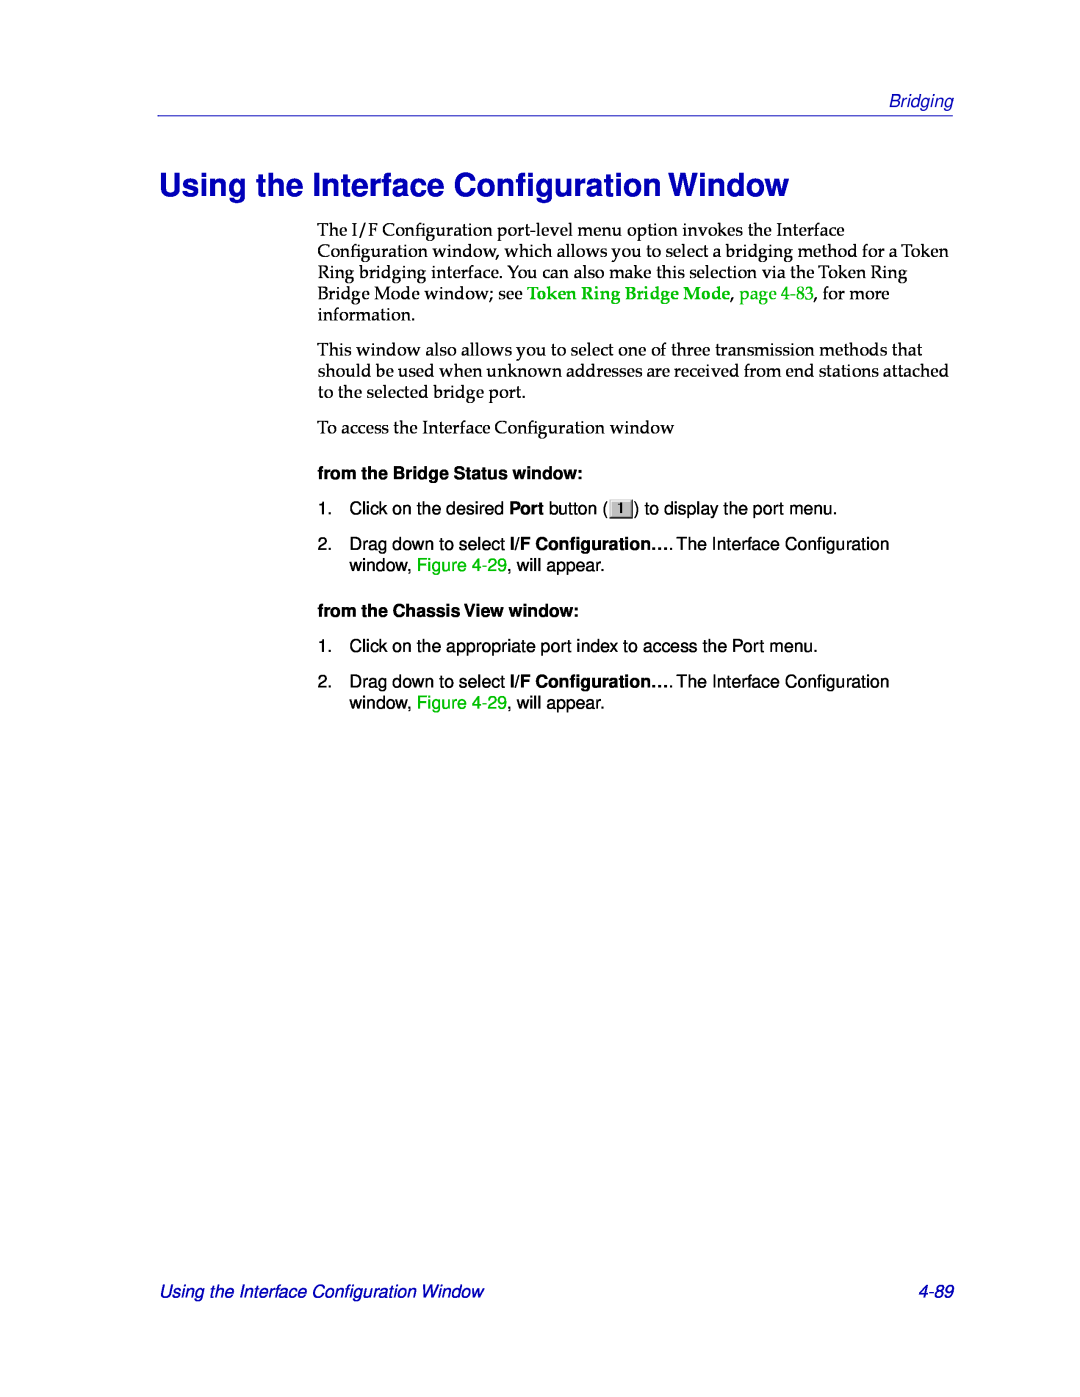 Cabletron Systems CSX200, CSX400 Using the Interface Conﬁguration Window, 4-89, Bridging, from the Bridge Status window 